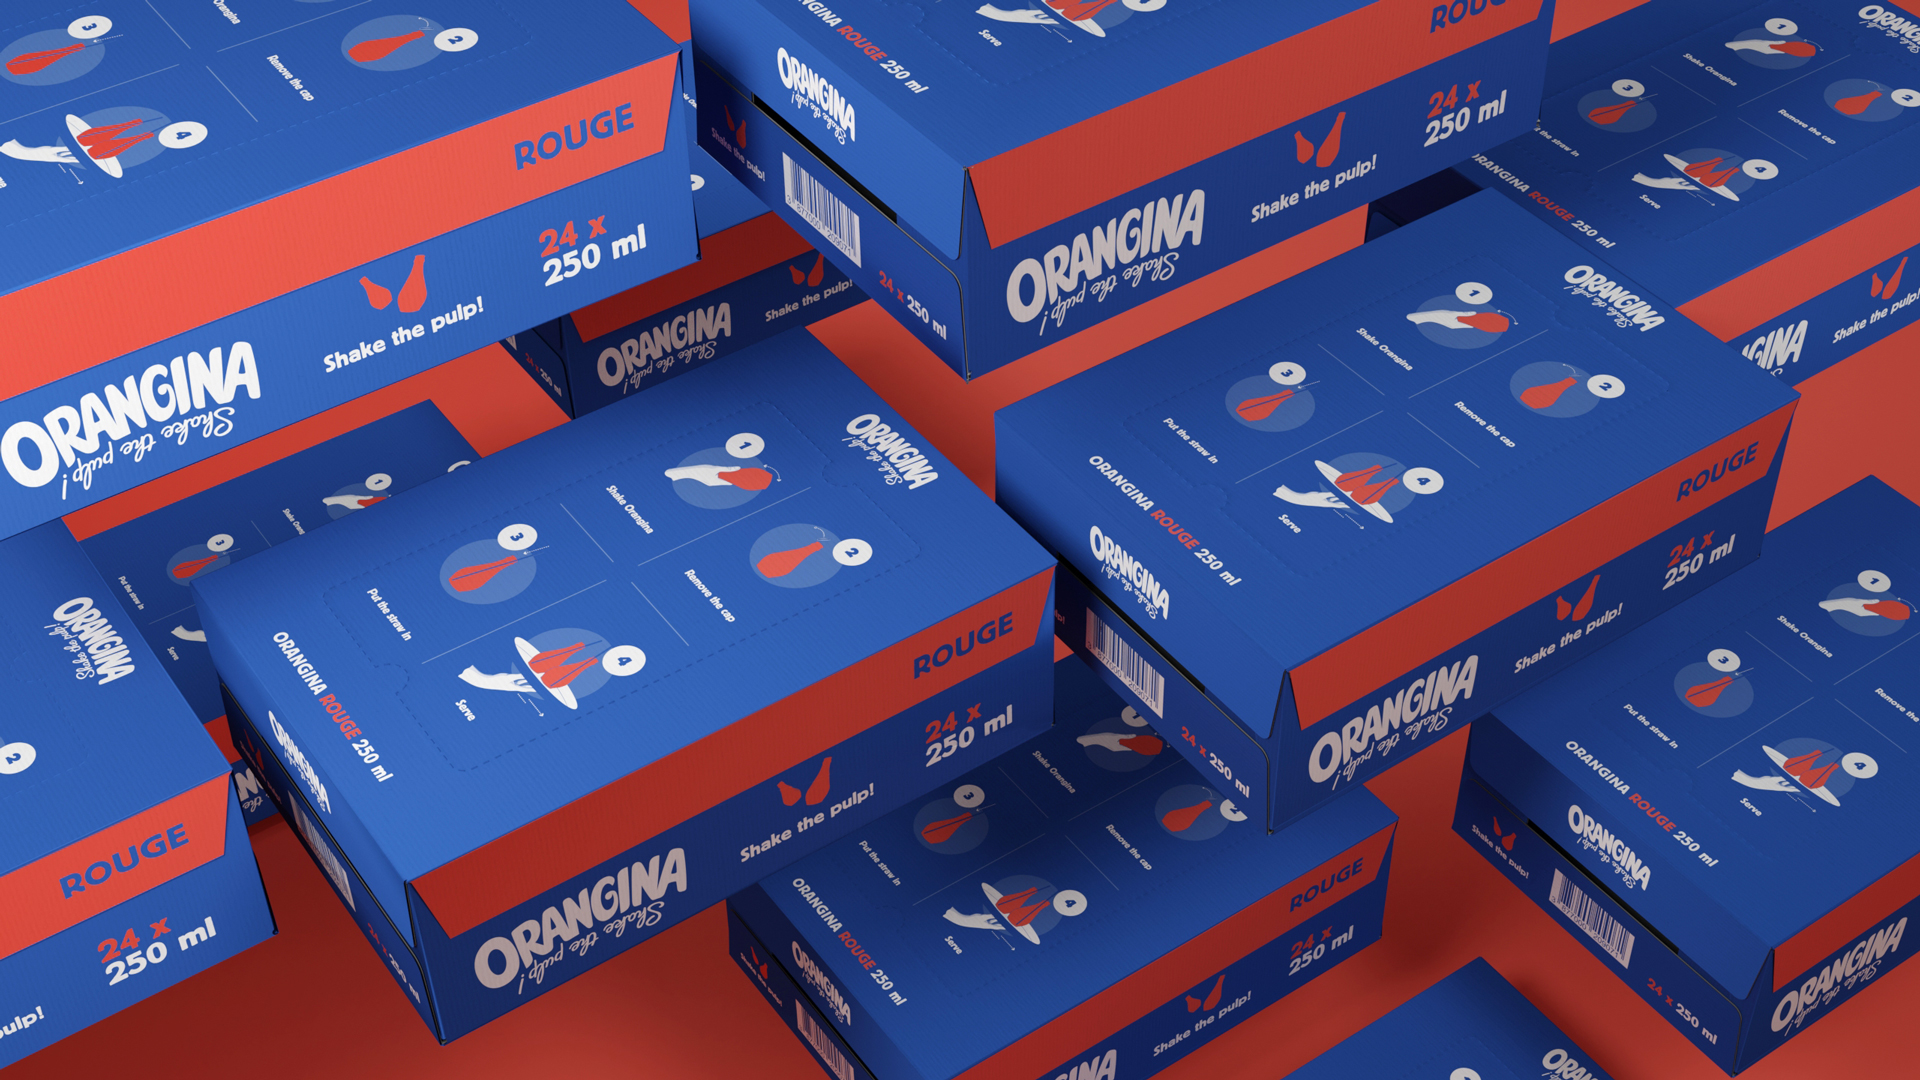 Orangina-Transport-Packaging-by-Emtisquare-10